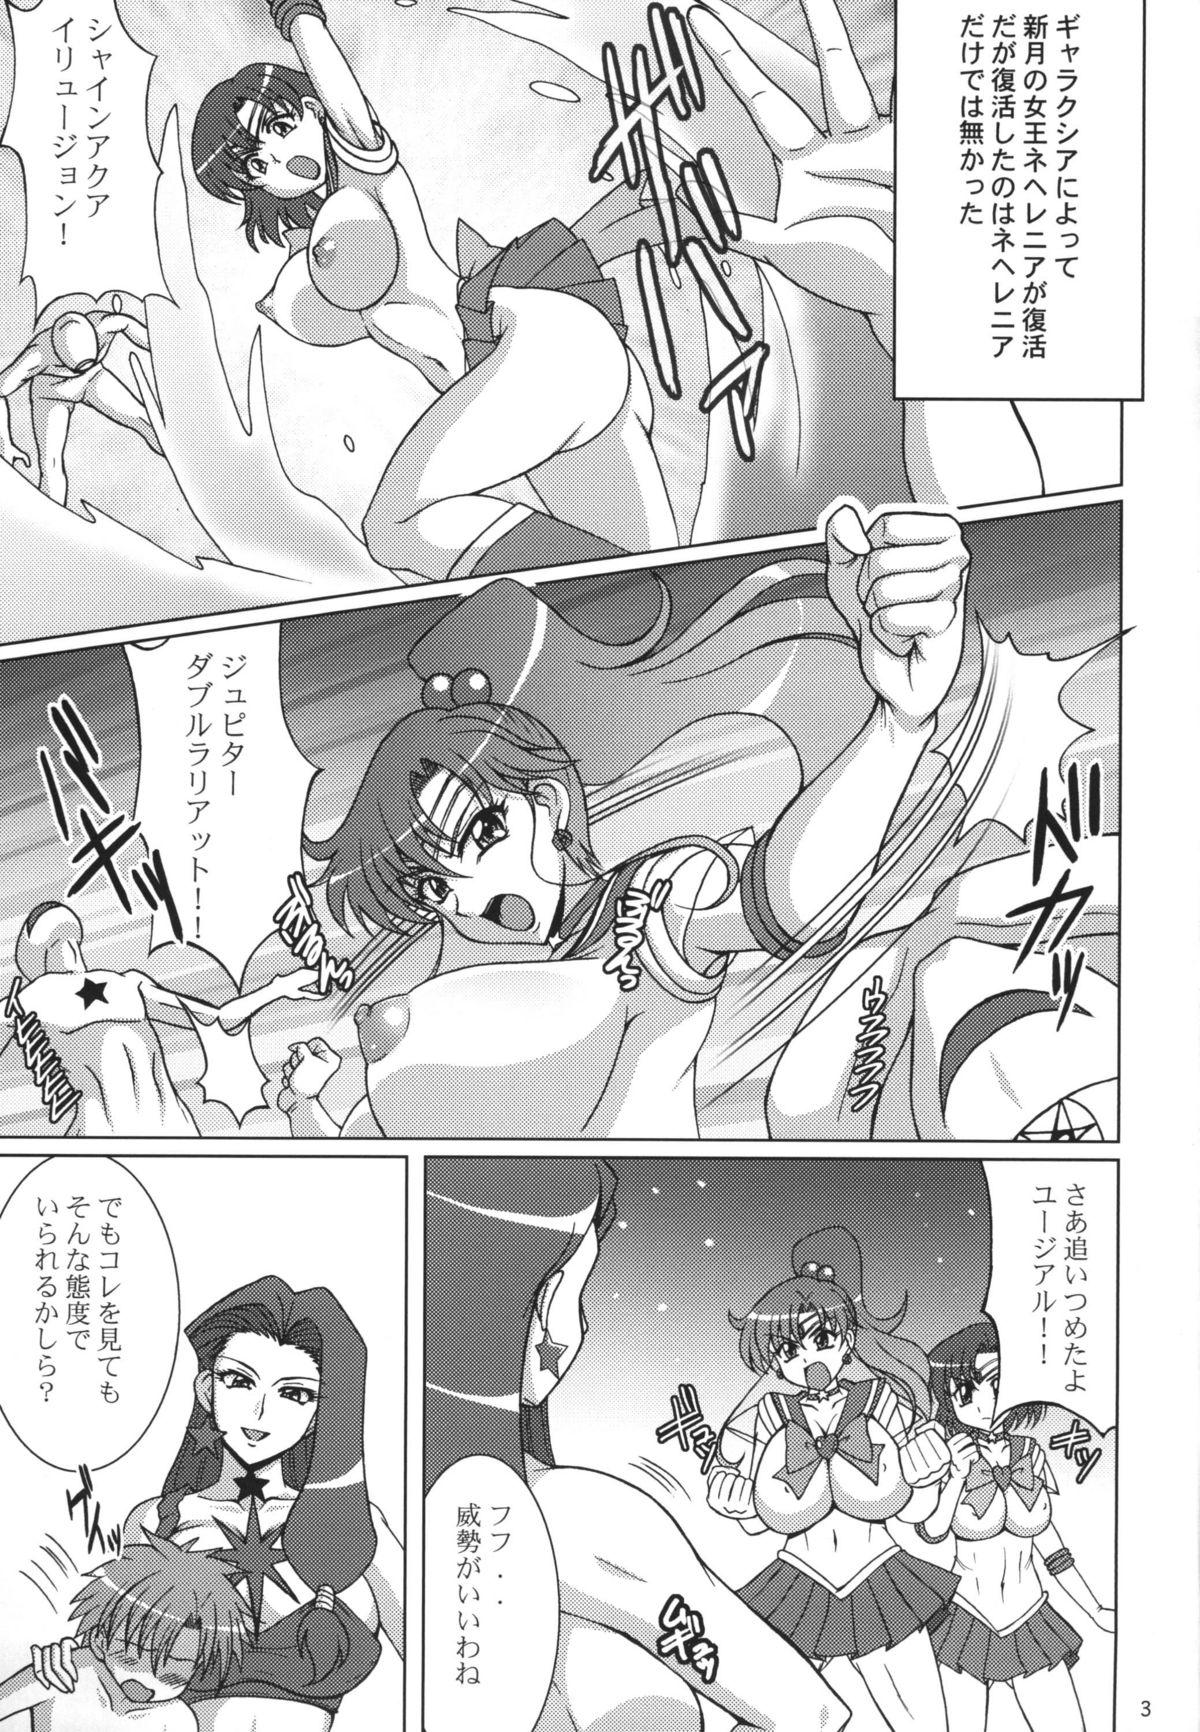 Camgirls Gekkou Mizuki - Sailor moon Viet Nam - Page 3